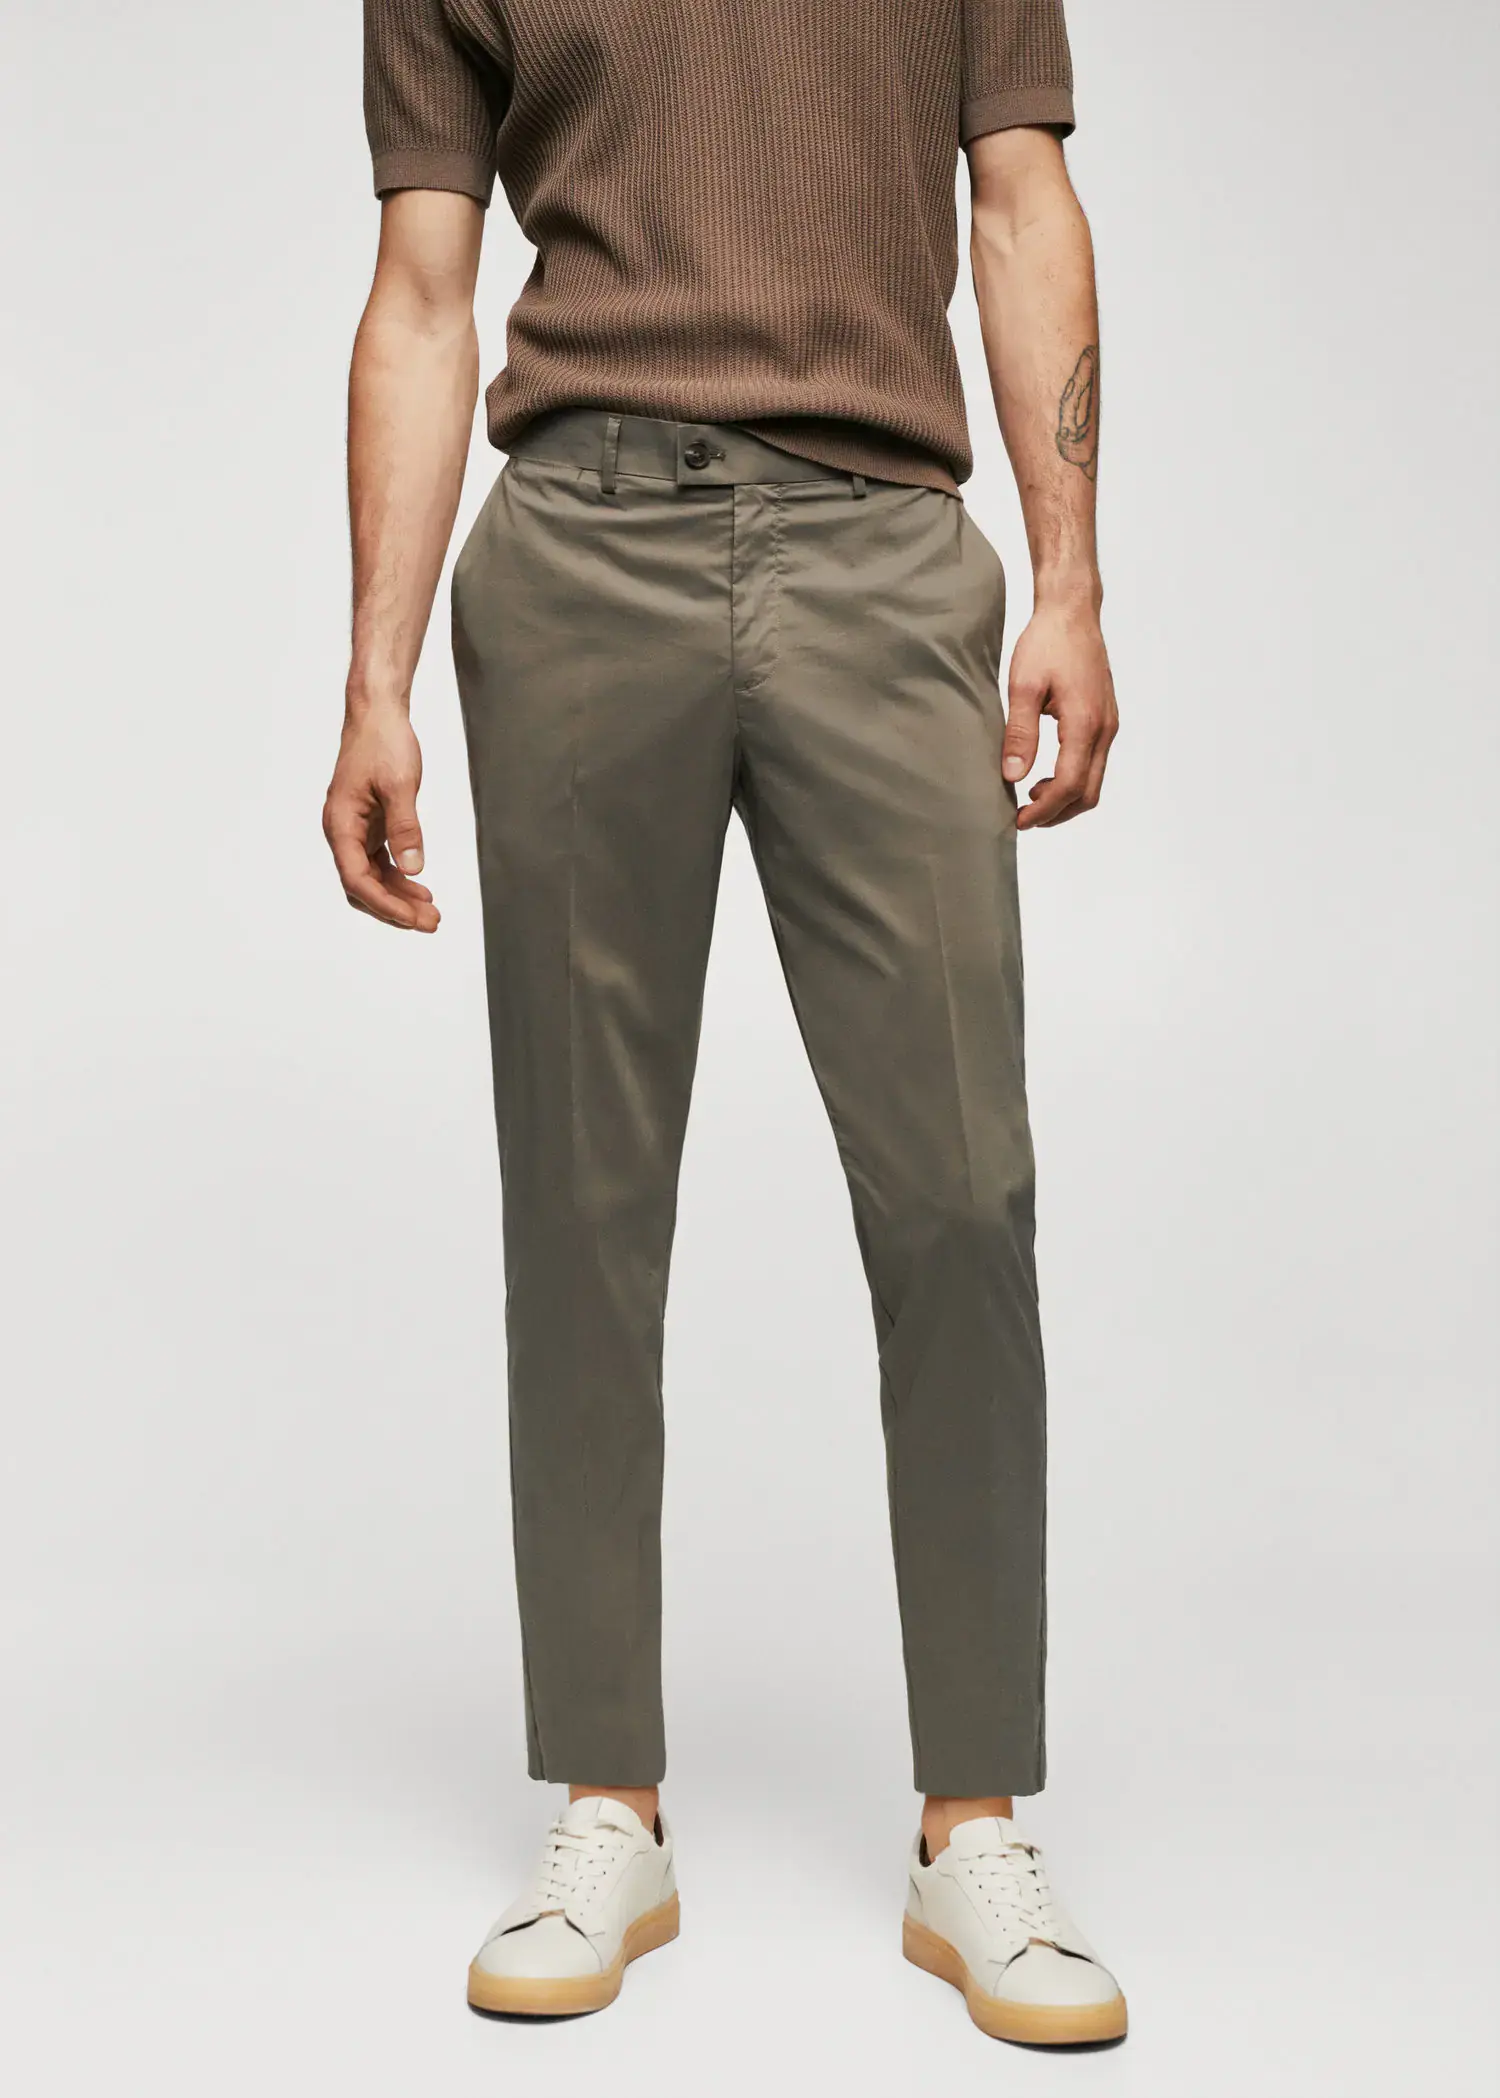 Mango Lightweight cotton pants. a man wearing a pair of khaki colored pants. 